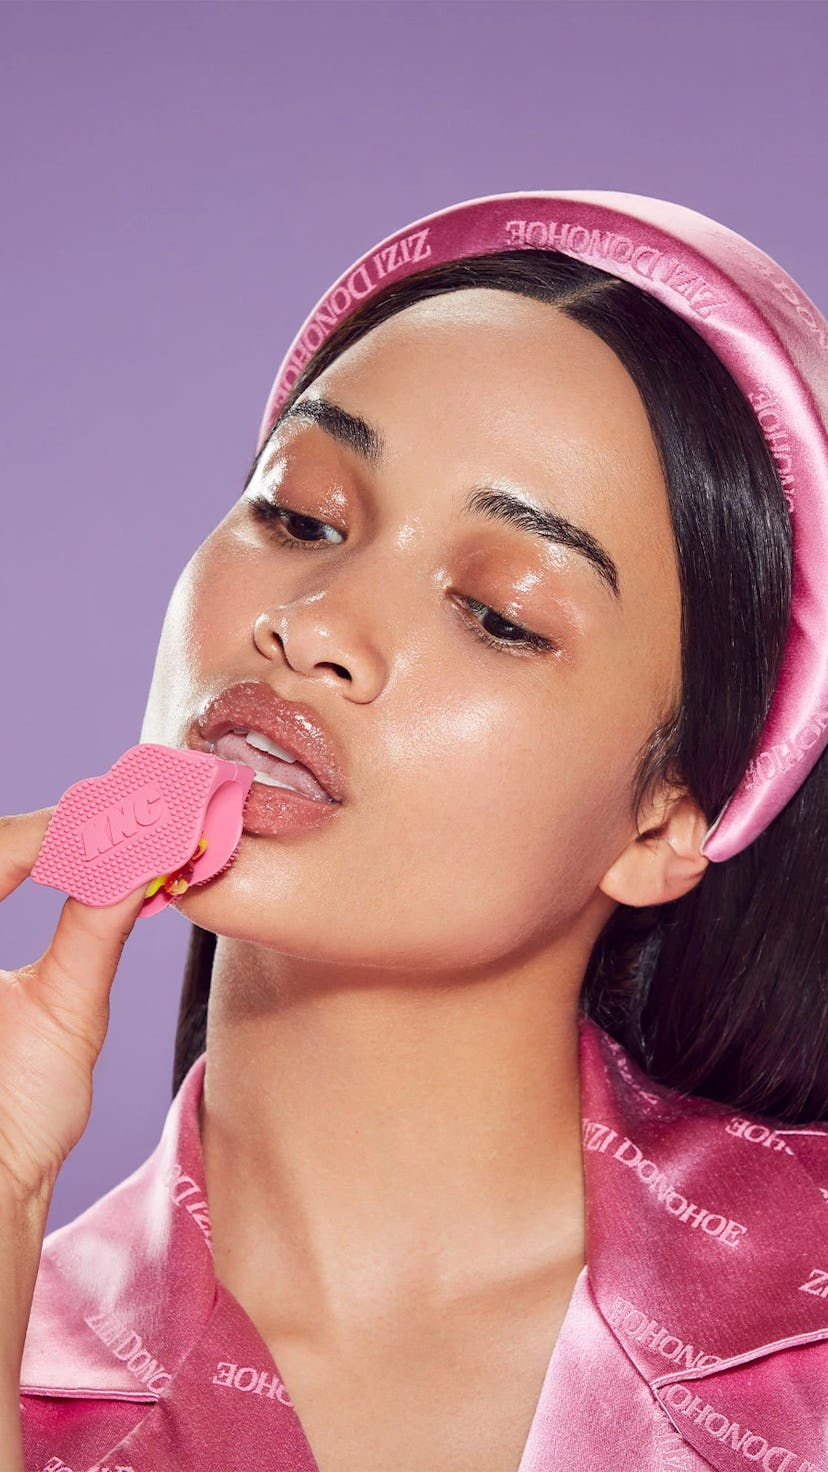 A model with glossy skin applies the KNC lip scrub.